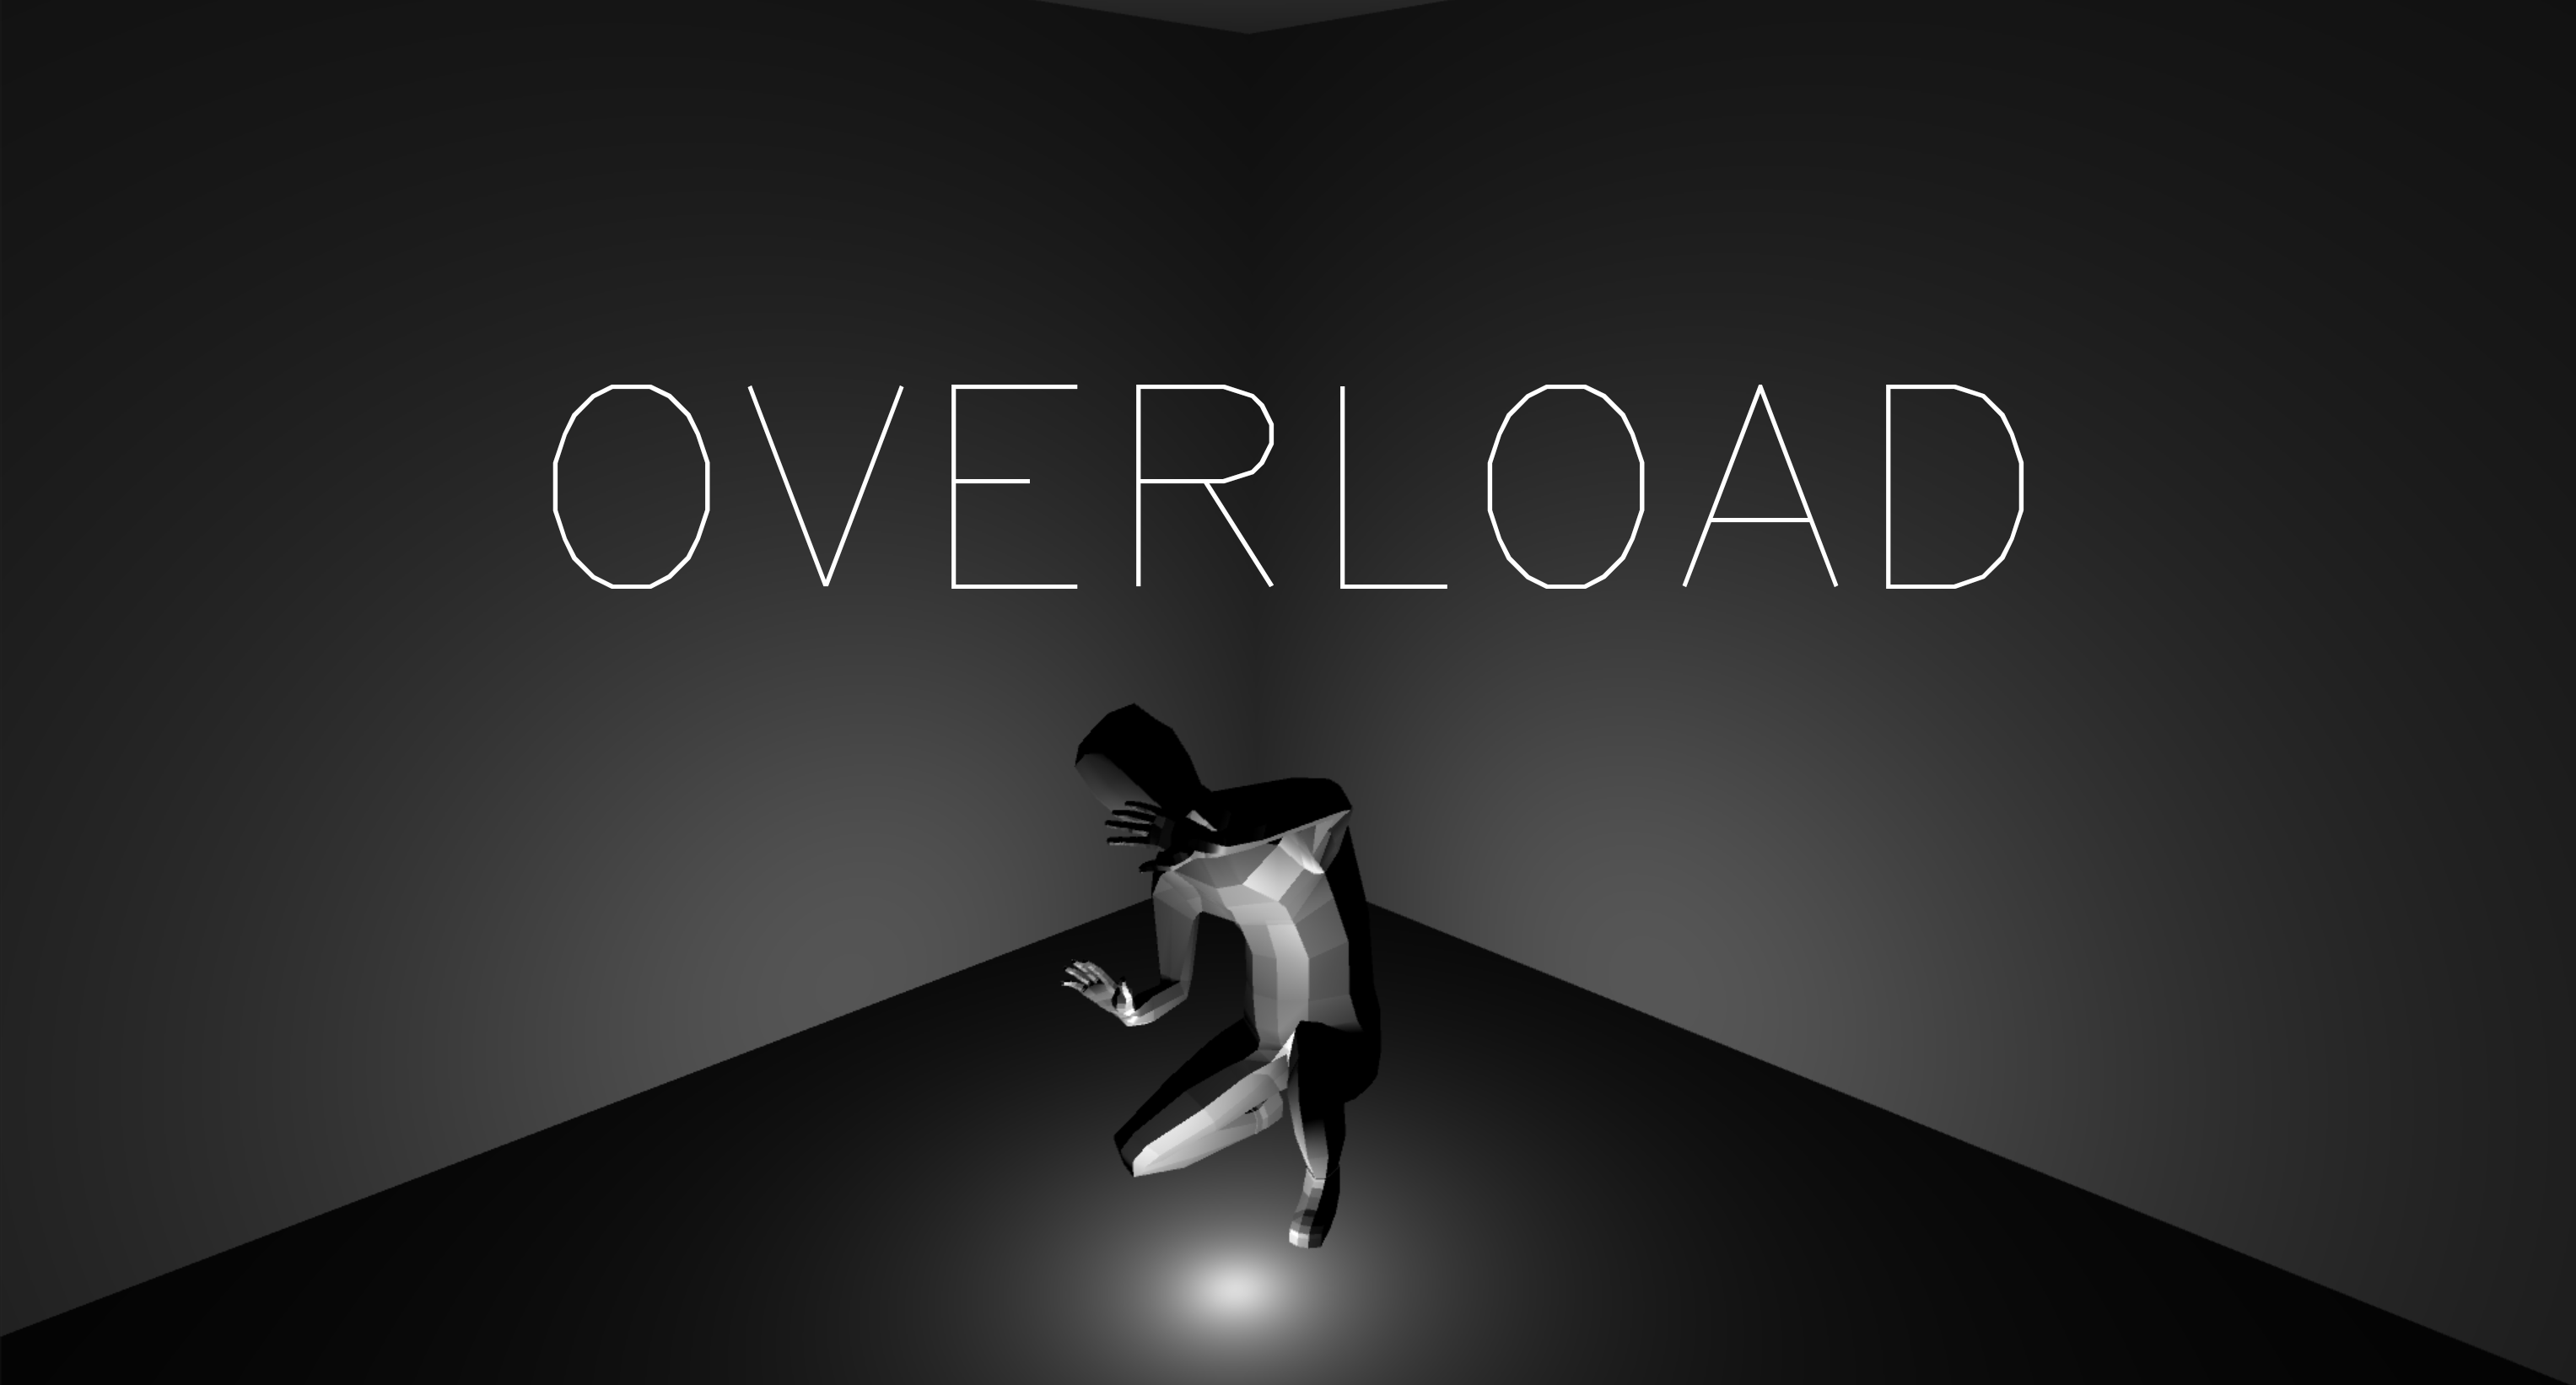 streamer overload game download free